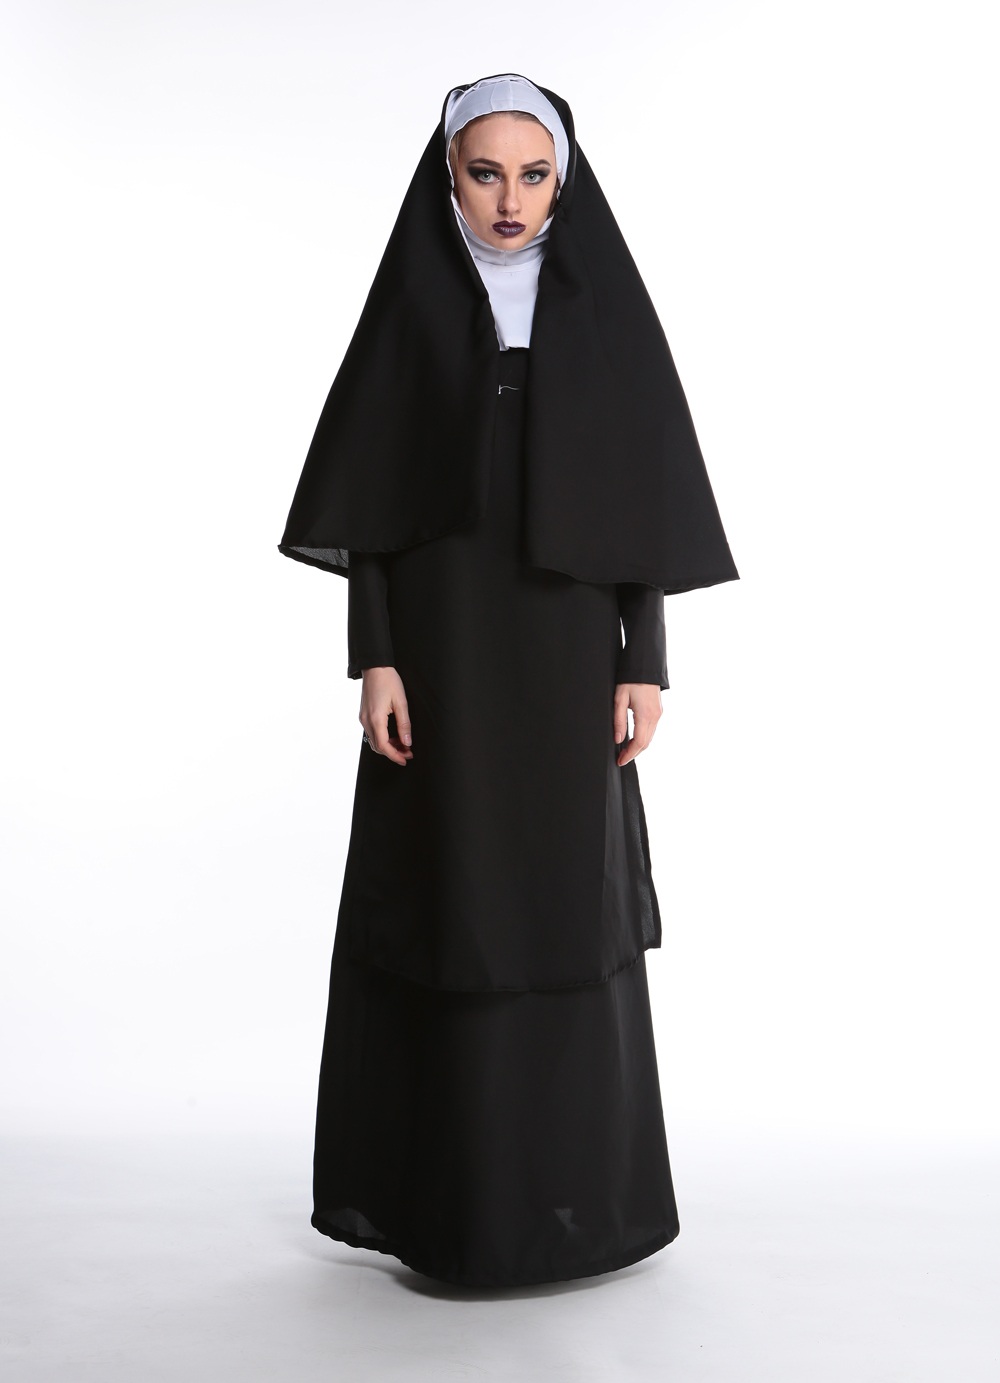 F1732 sexy hood nun costume,it comes with hood cape,dress